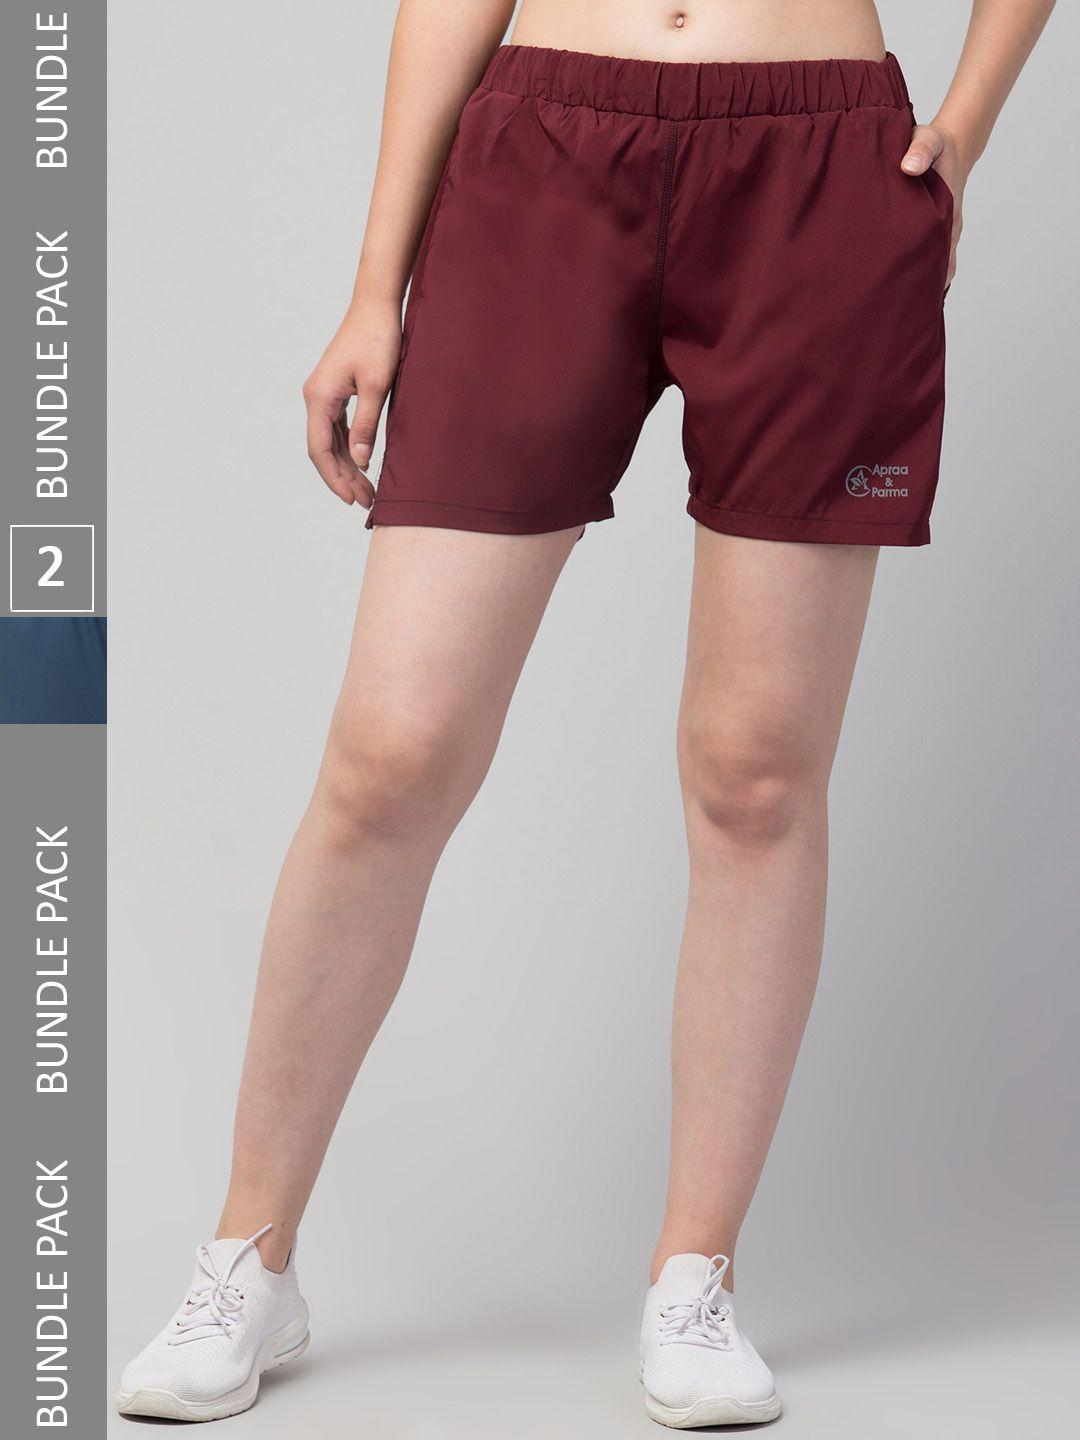 apraa & parma women e-dry technology sports shorts